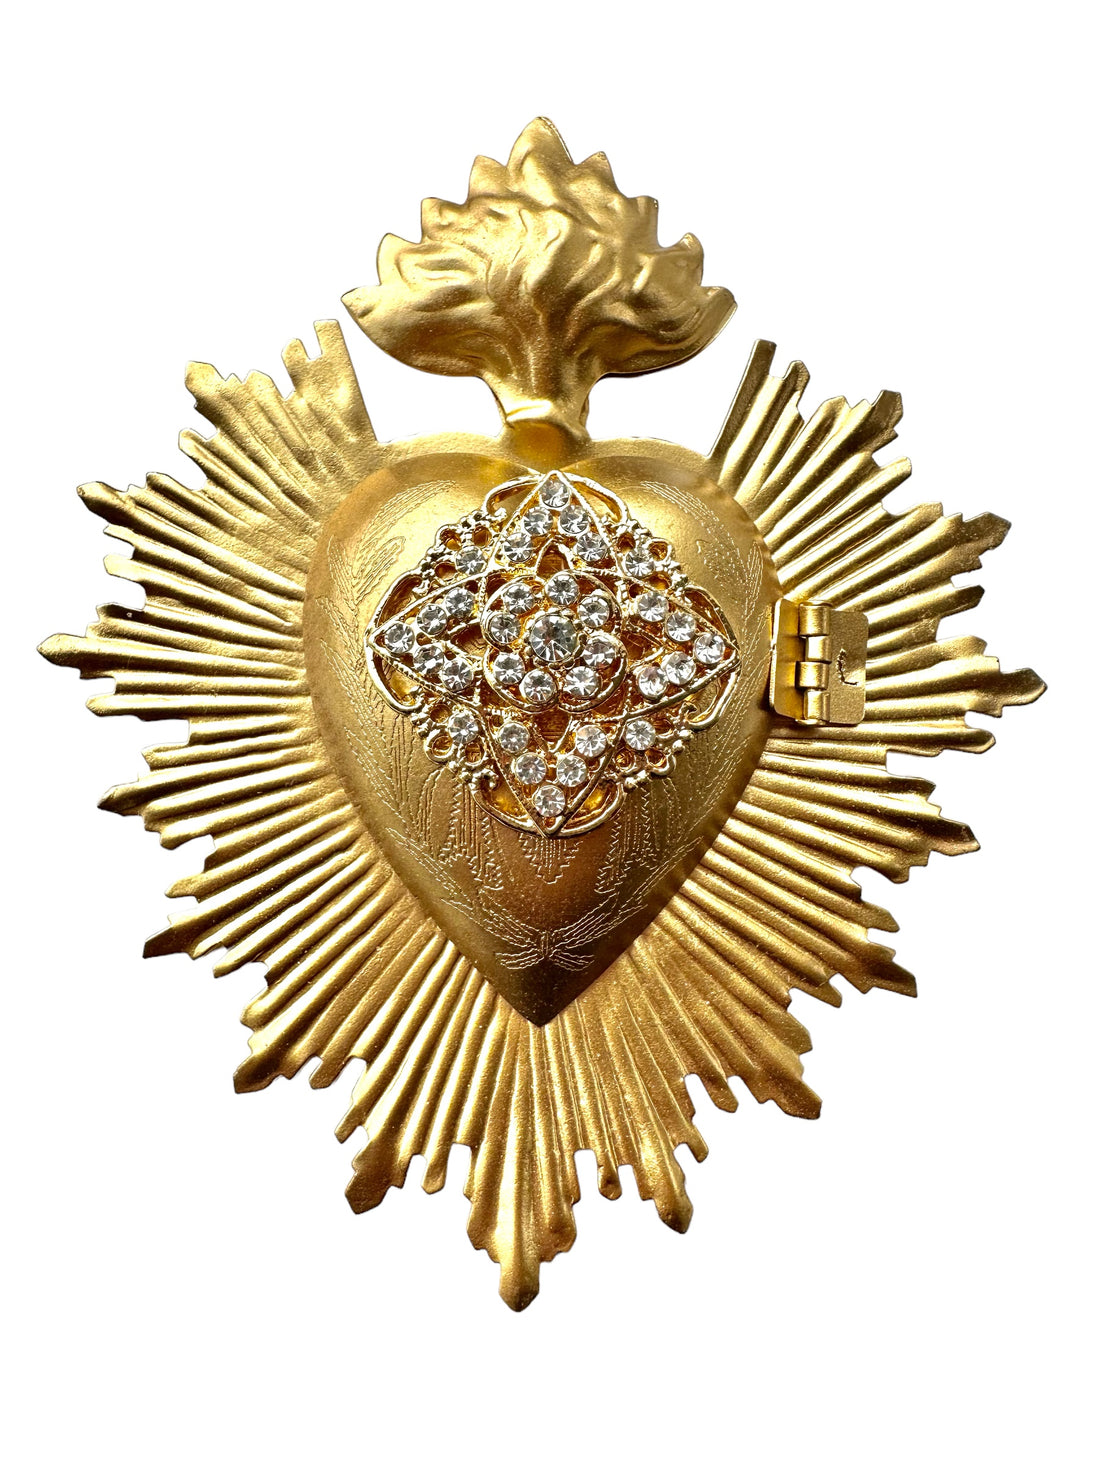 Sacred Heart, Catholic gifts, christian gifts, embellished, gold heart, gold locket, prayer box, gold ornament, heart of jesus, Lent gift, Easter gift